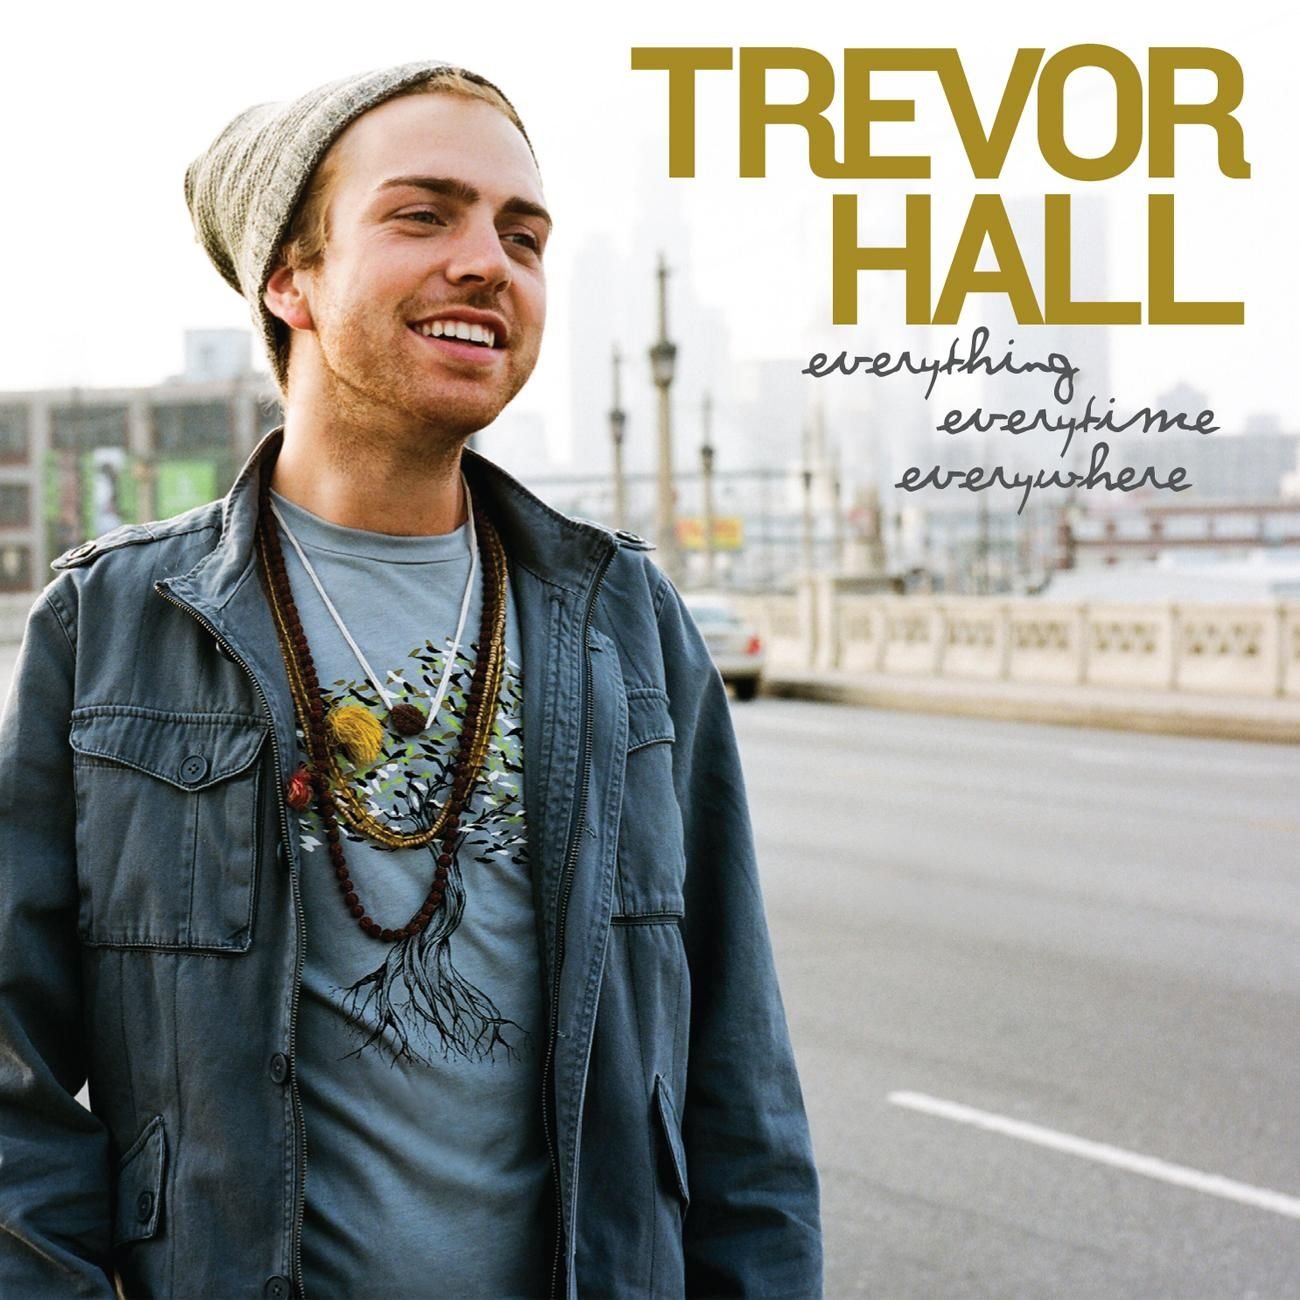 Hall слушать. Trevor Hall. Trevor Sewell обложка. Everytime everywhere everything. Trevor Hall poster Concert.